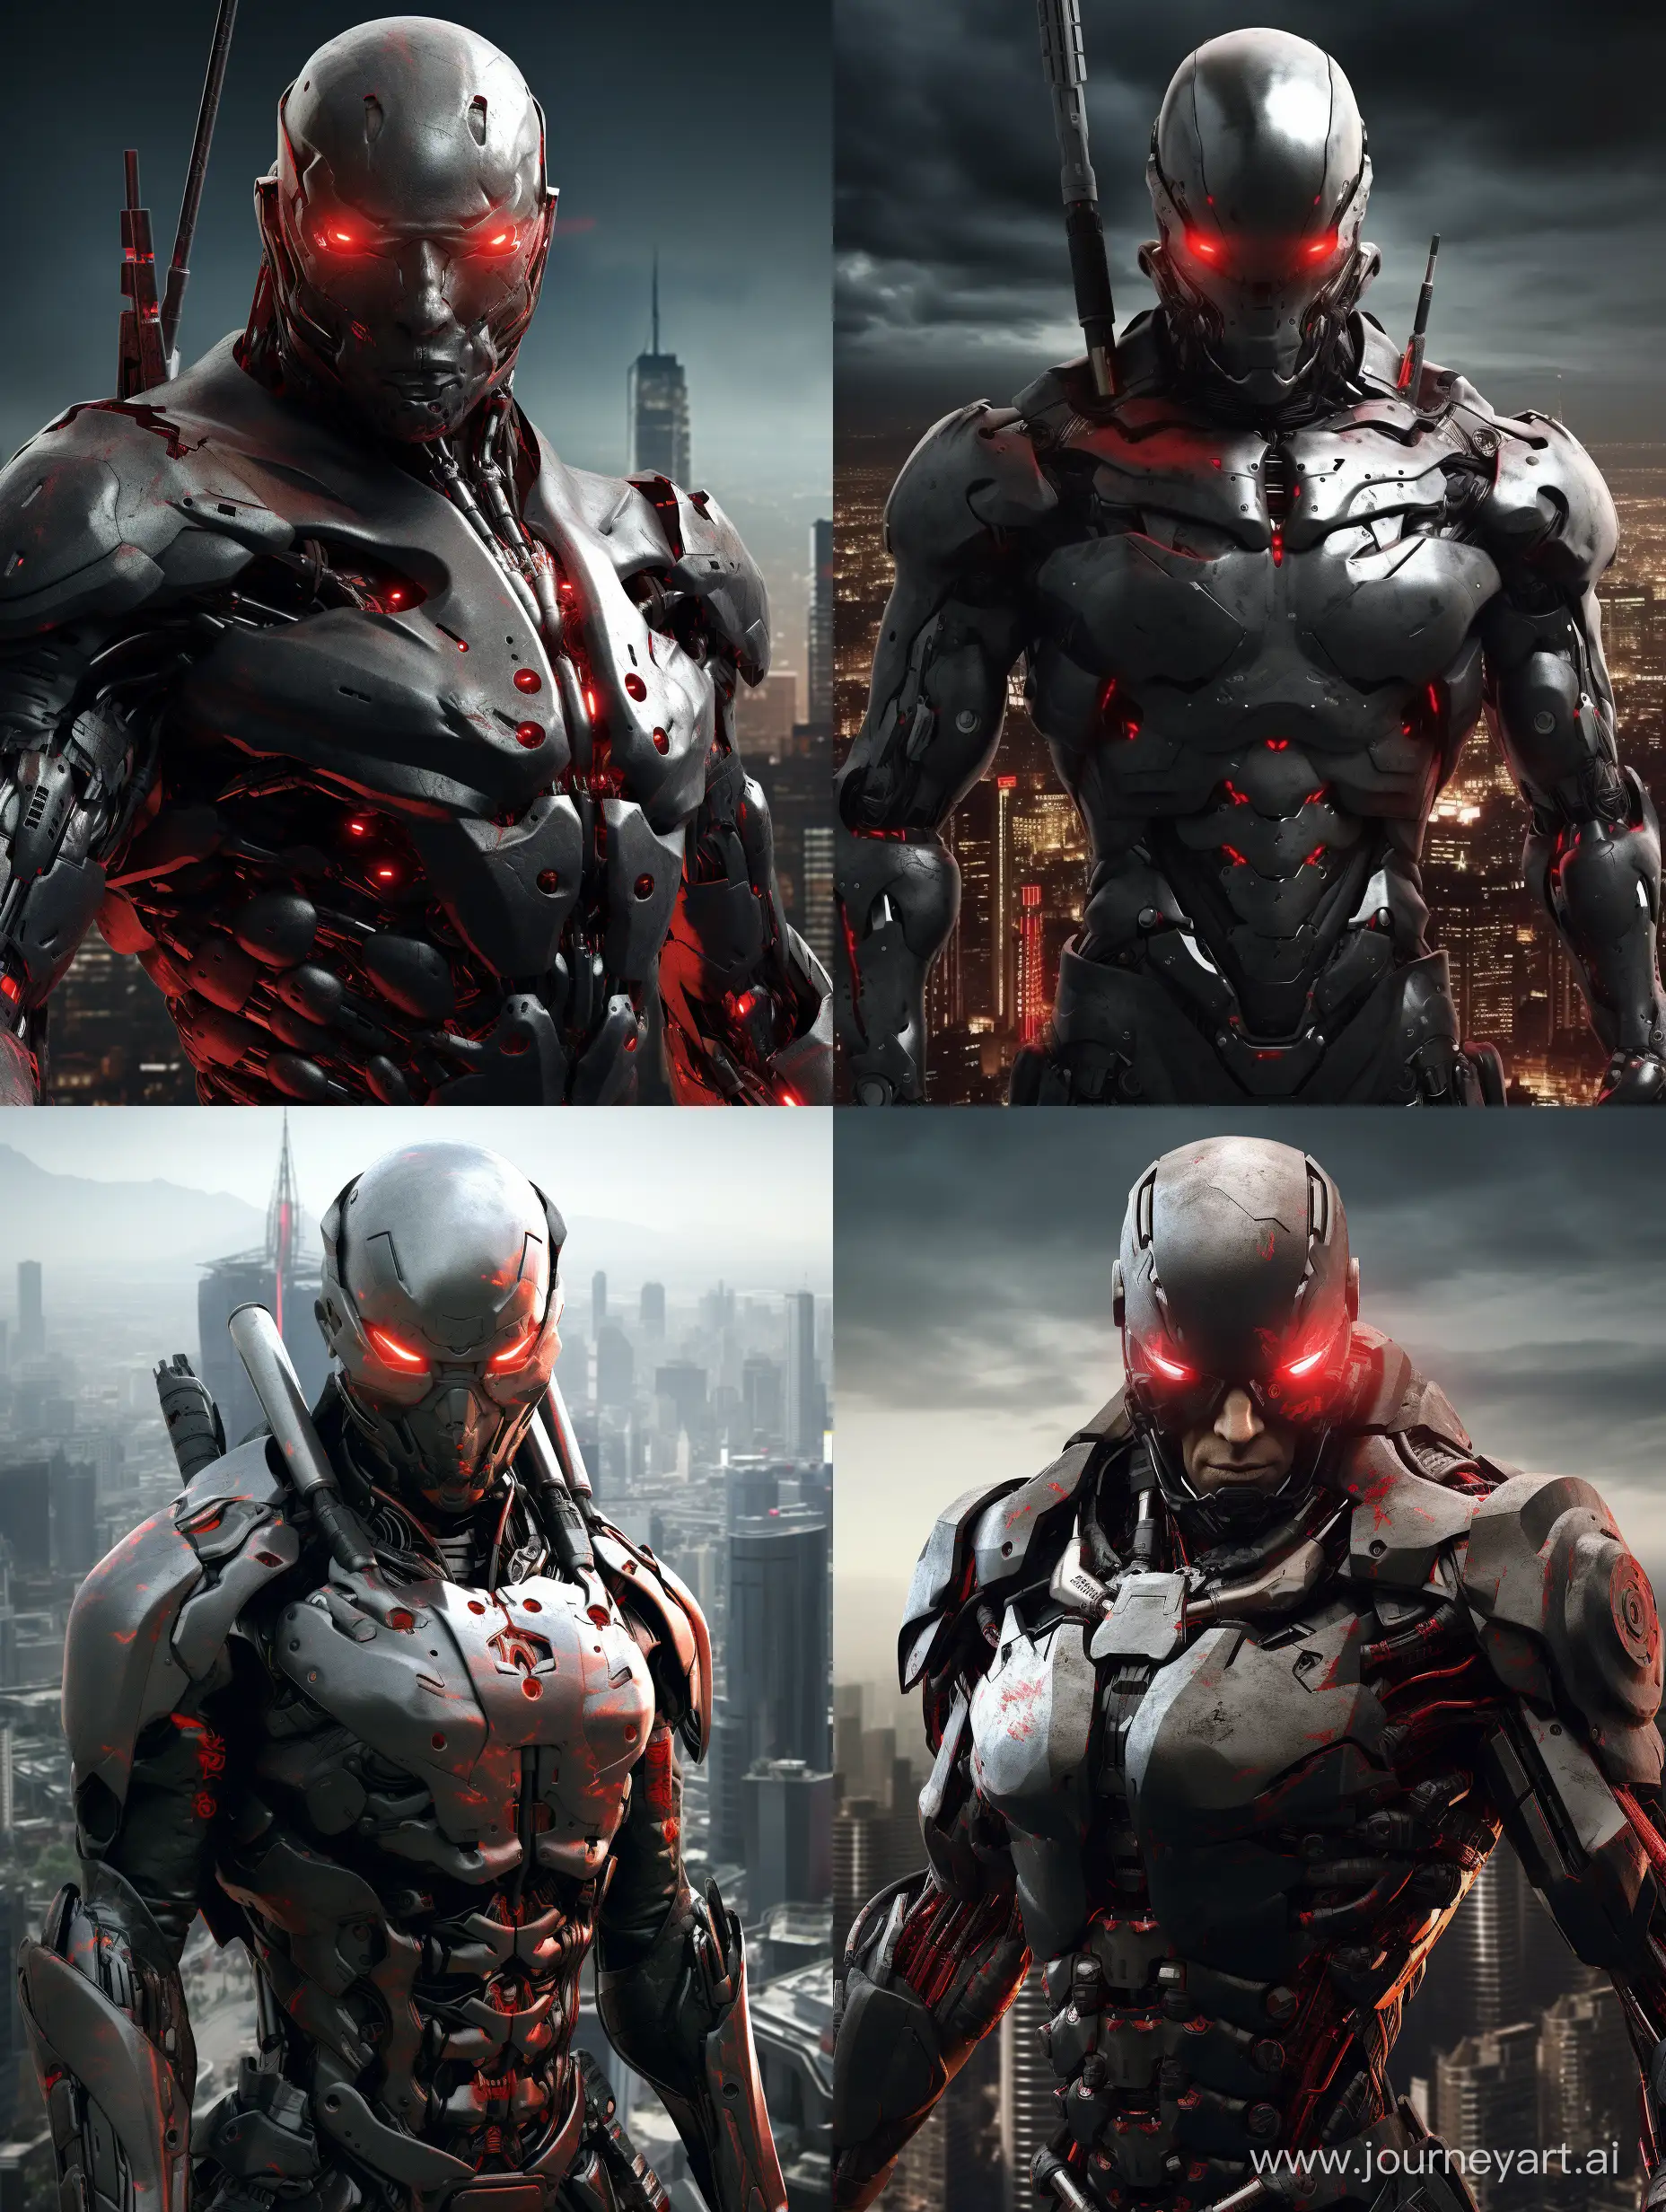 Powerful-Cyborg-Ninja-Amidst-Futuristic-War